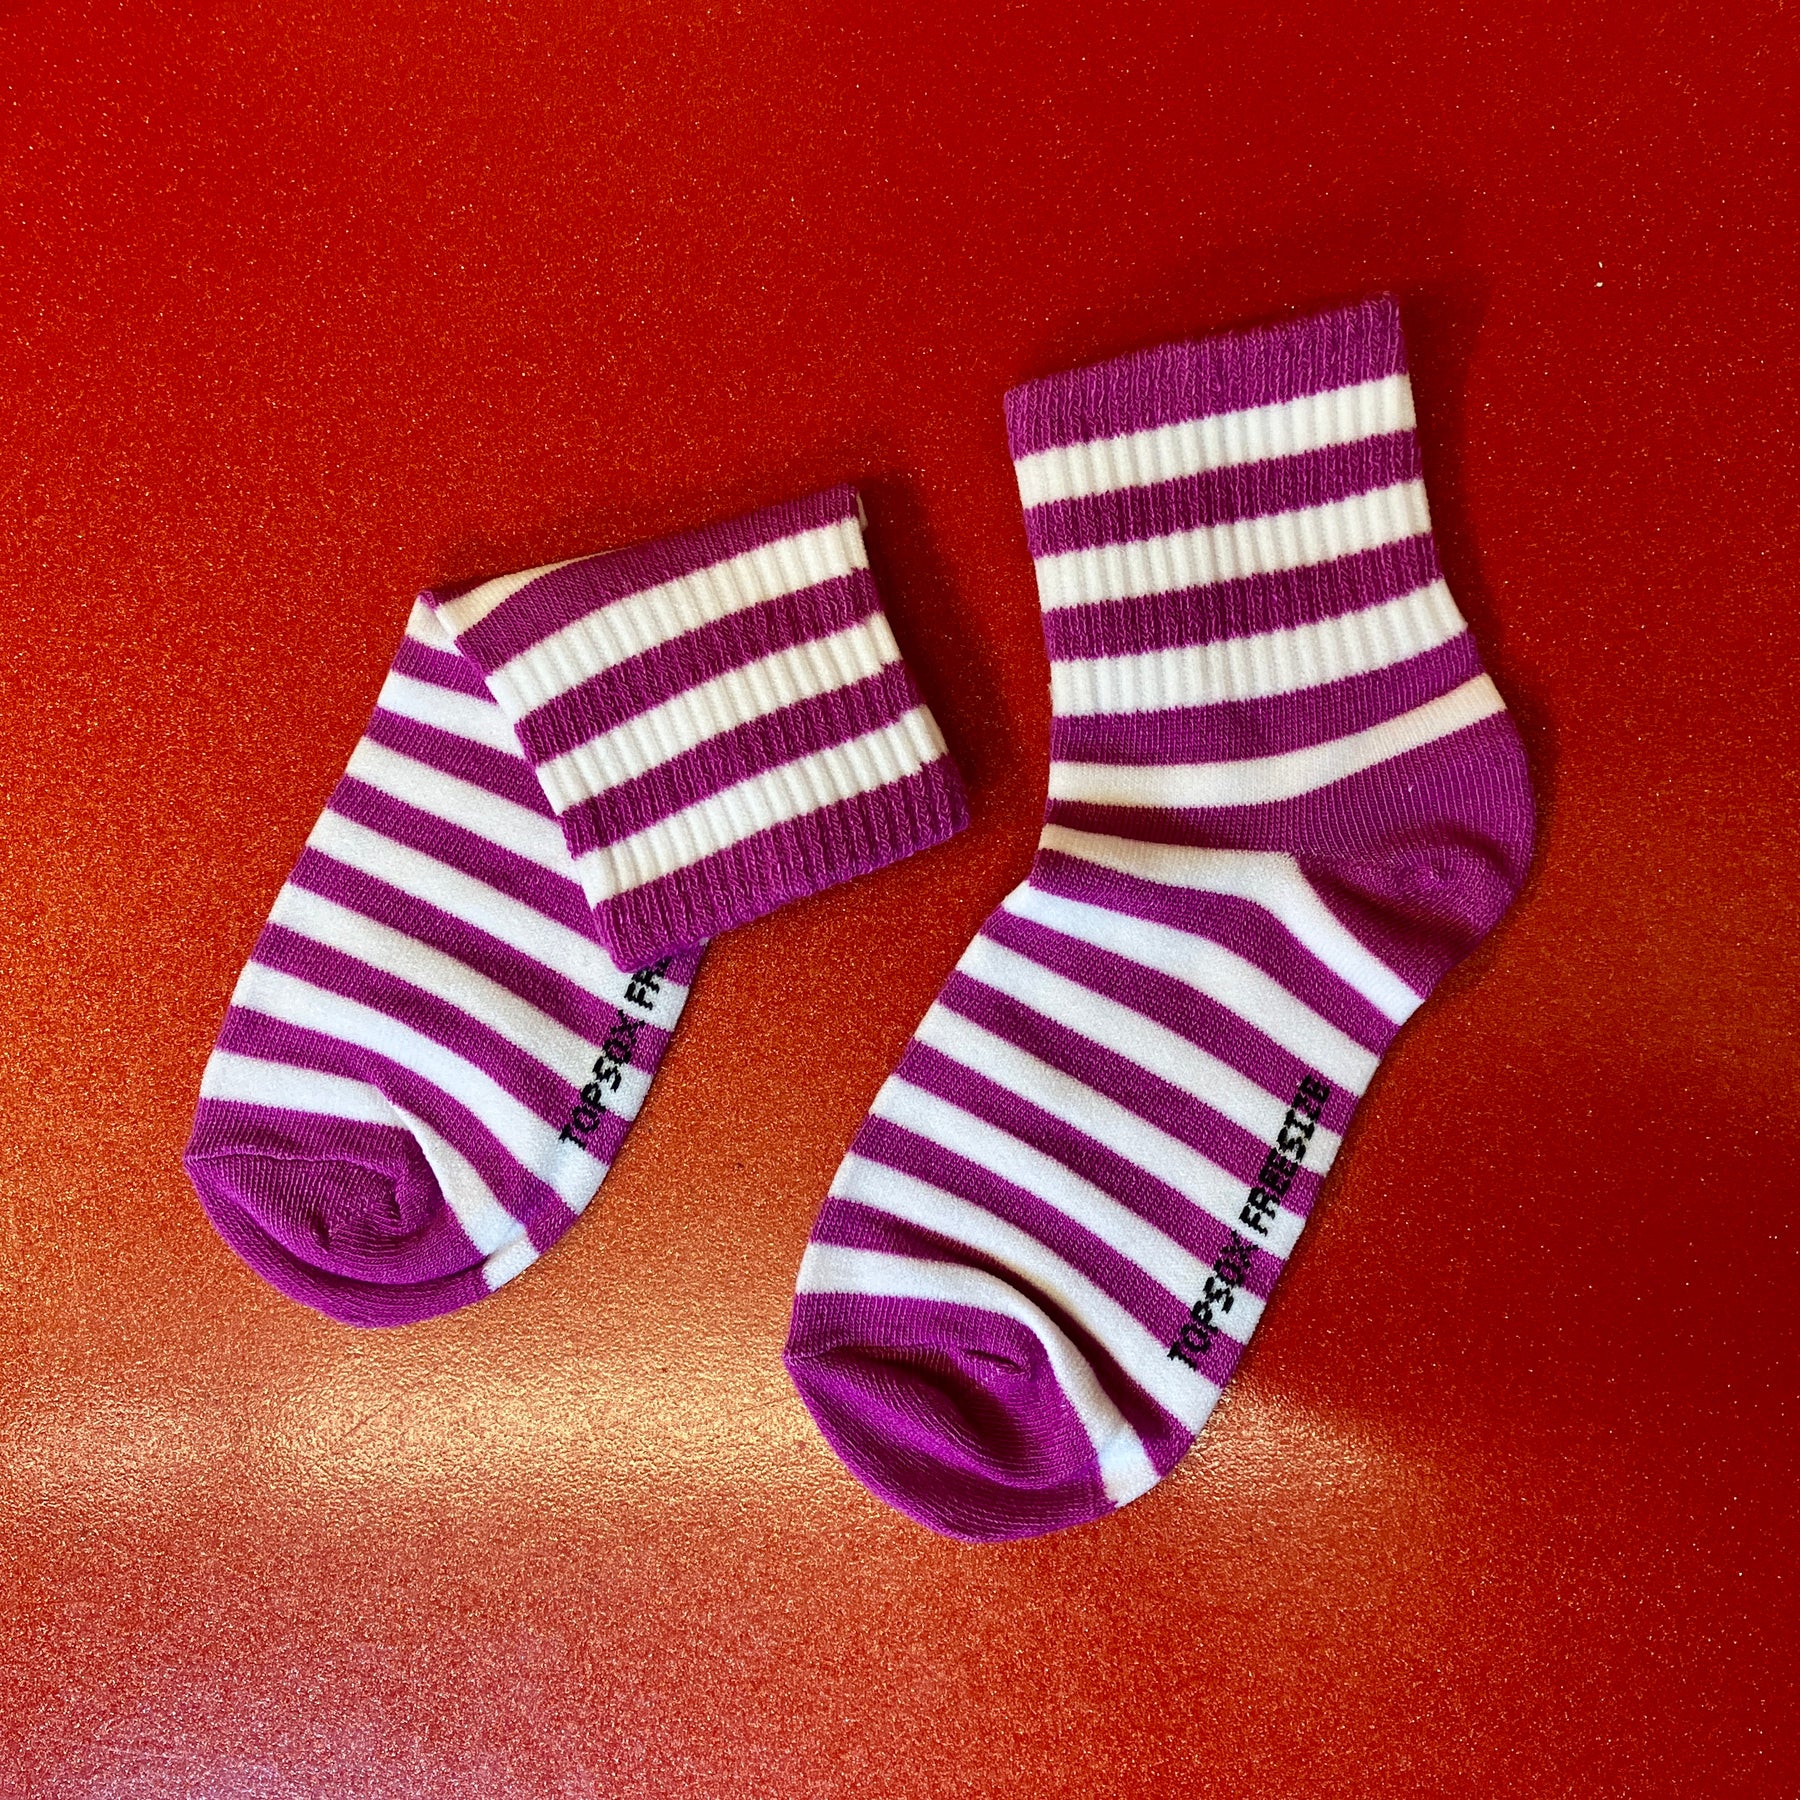 Anklets - Purple/White striped